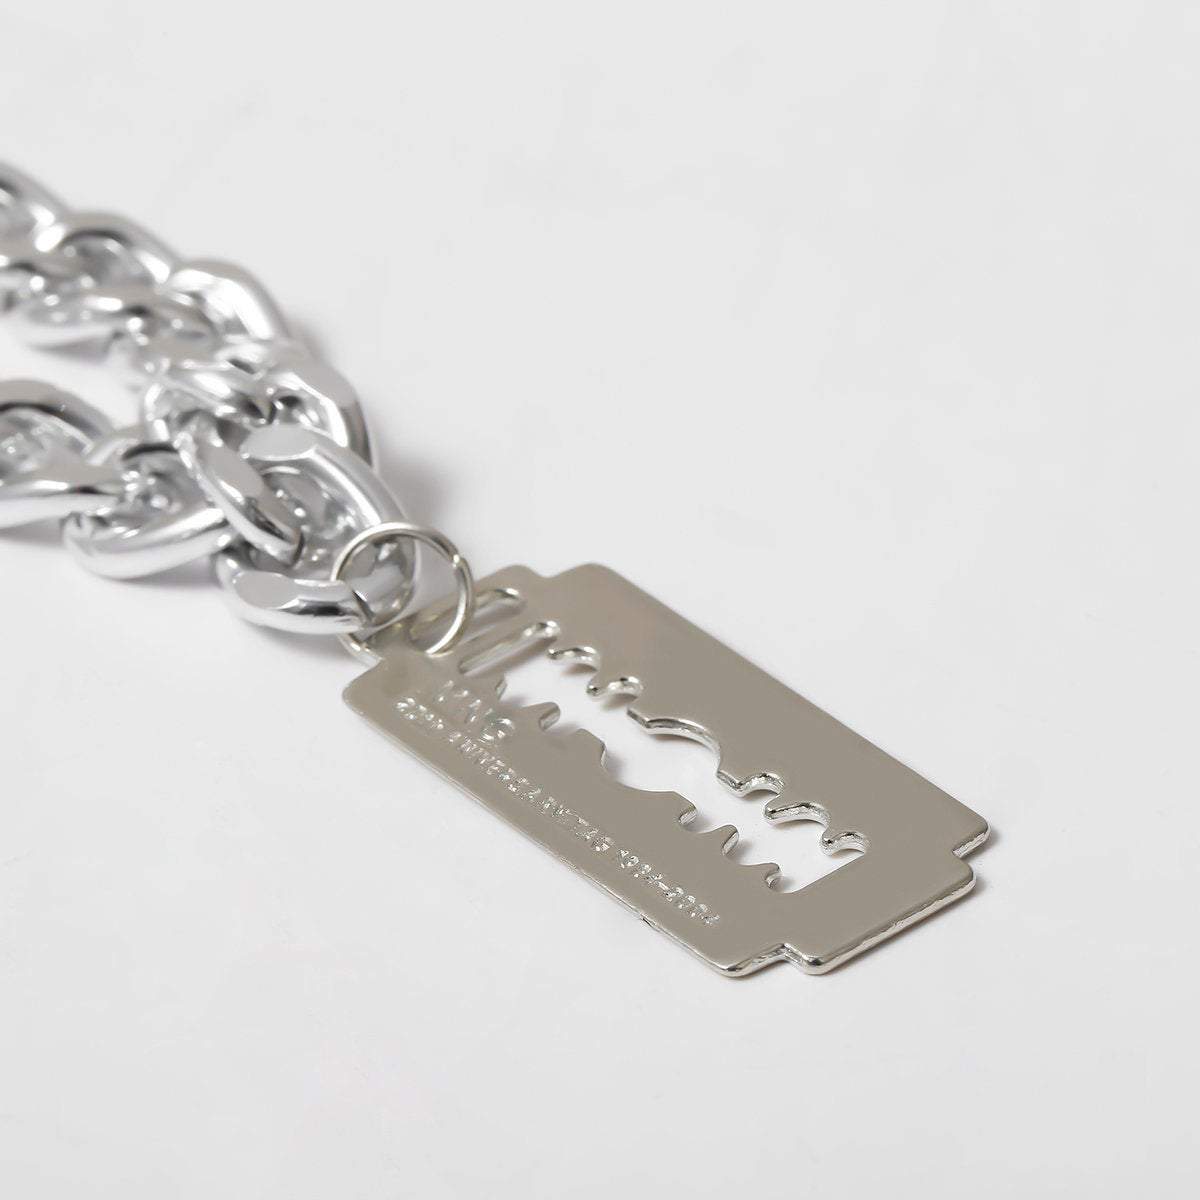 Antique Silver Razor Blade Pendant Necklace Punk Necklace 